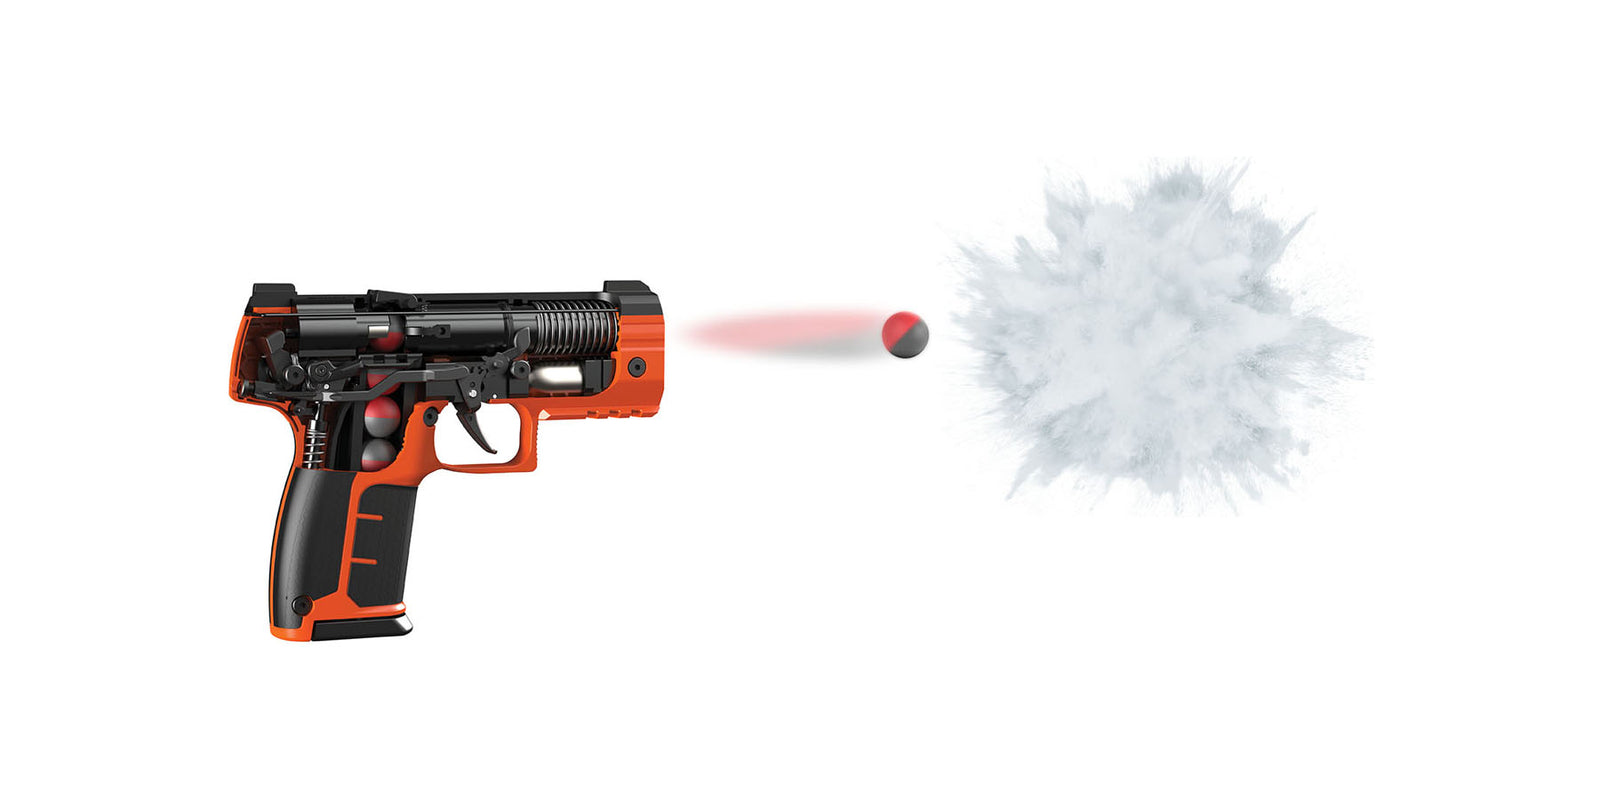 MAGEN – 5-shot non-lethal electroshock gun